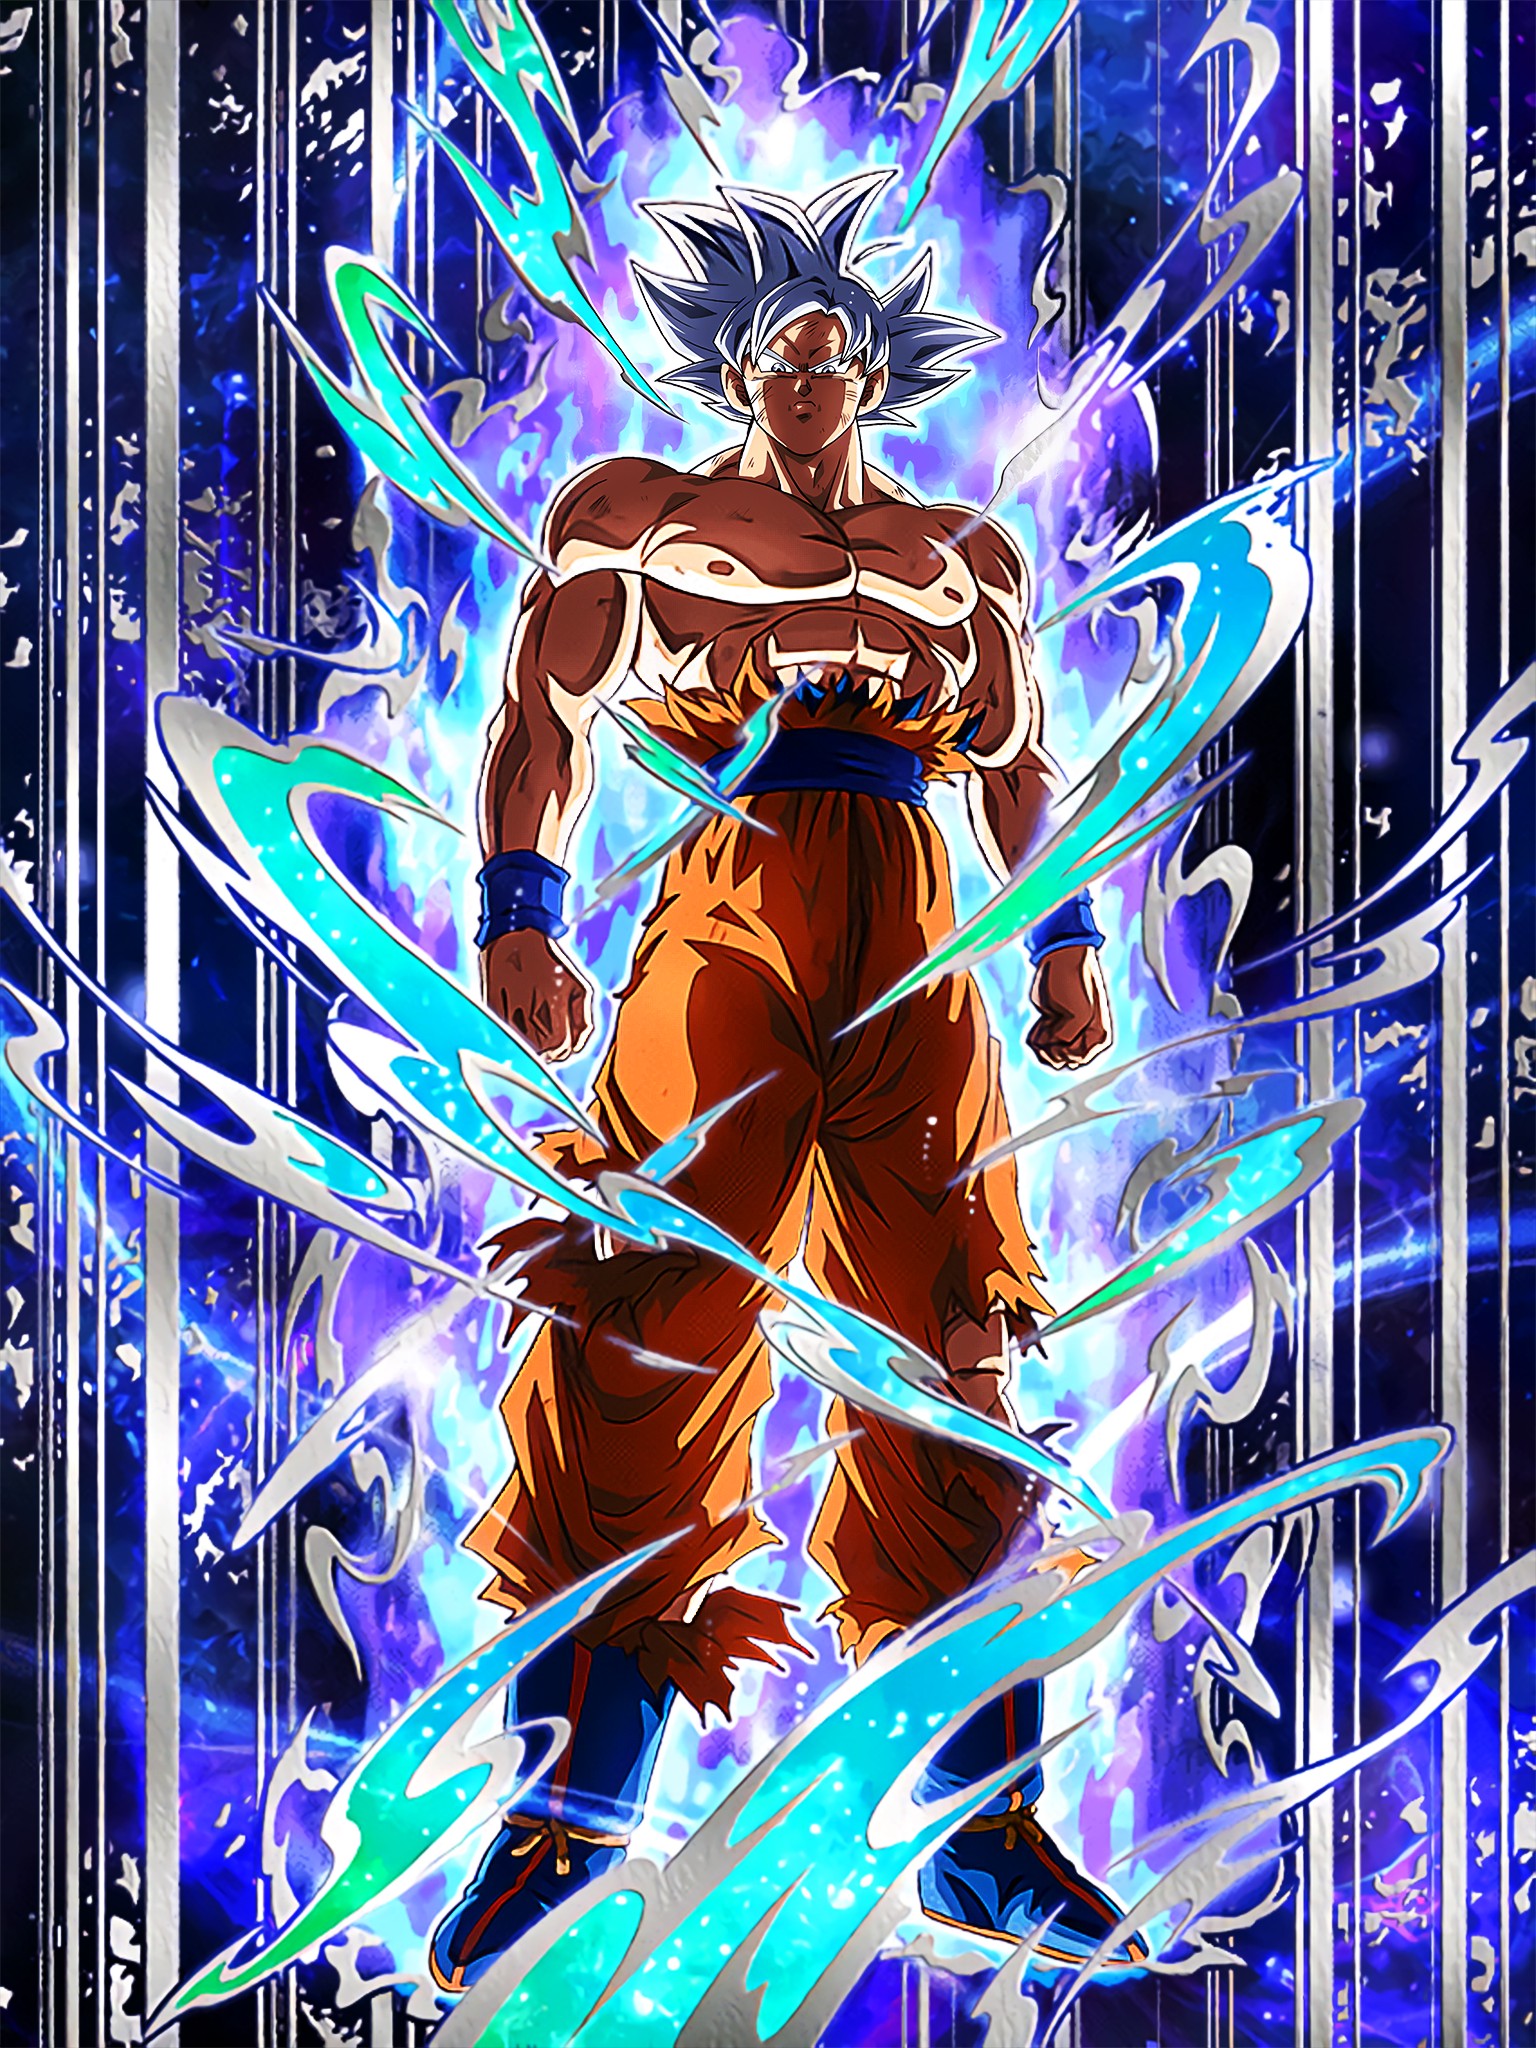 Ultra Instinct Goku TUR Transformation Art in HD!